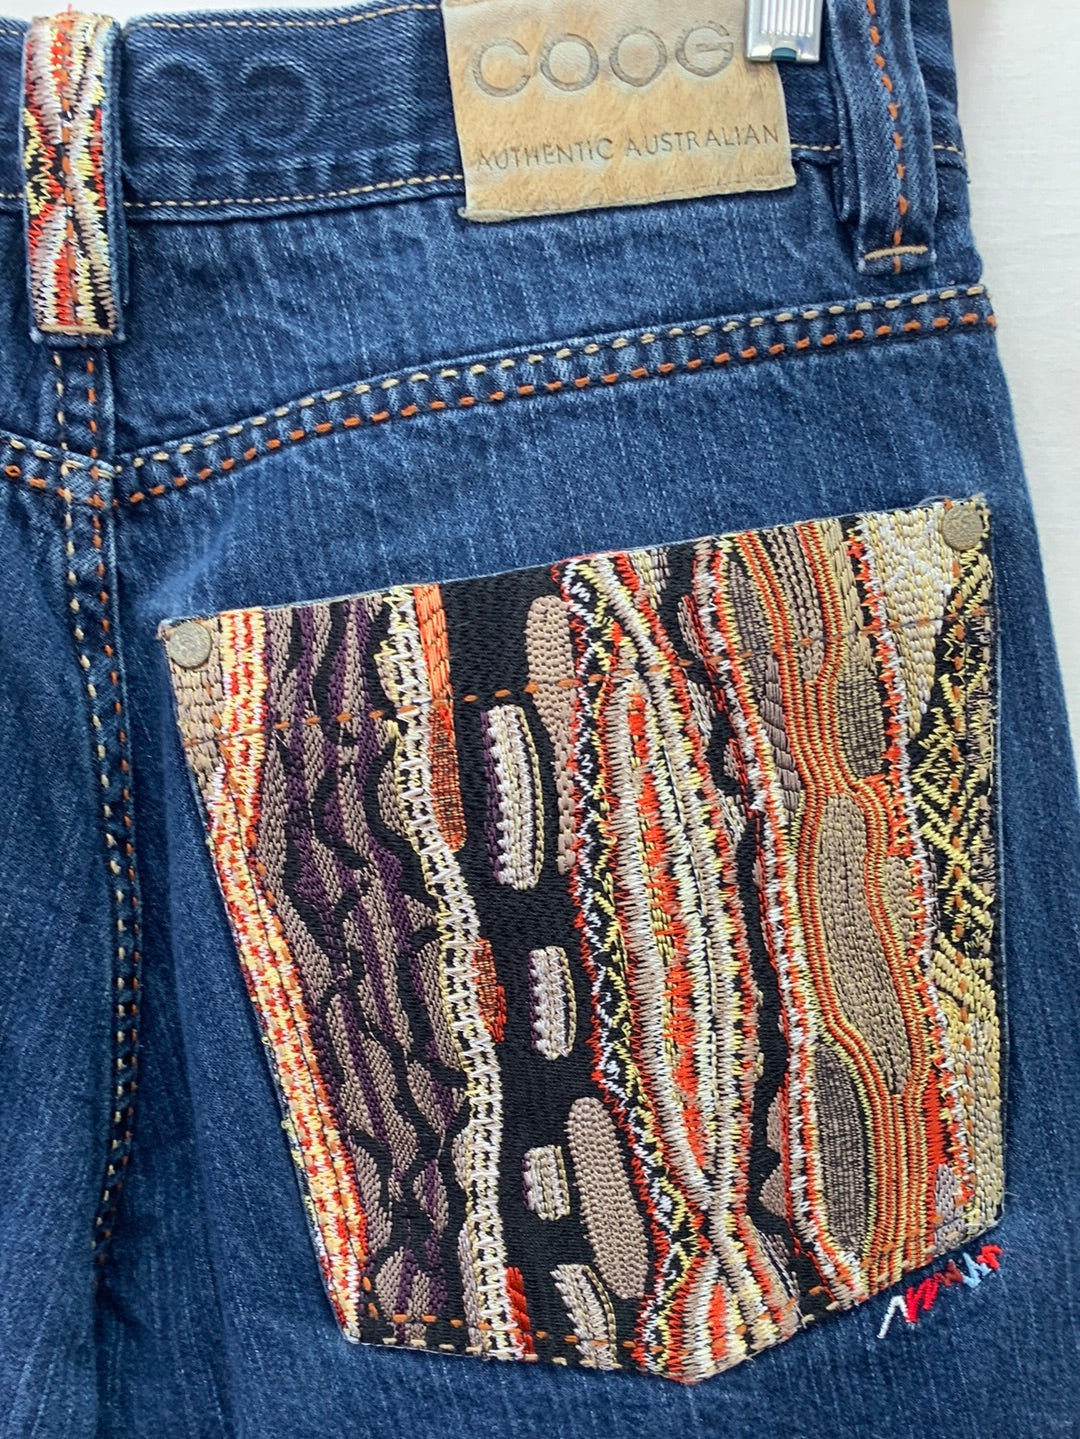 COOGI Denim Embroidered Pocket Short Pants / Long Shorts - 34x22